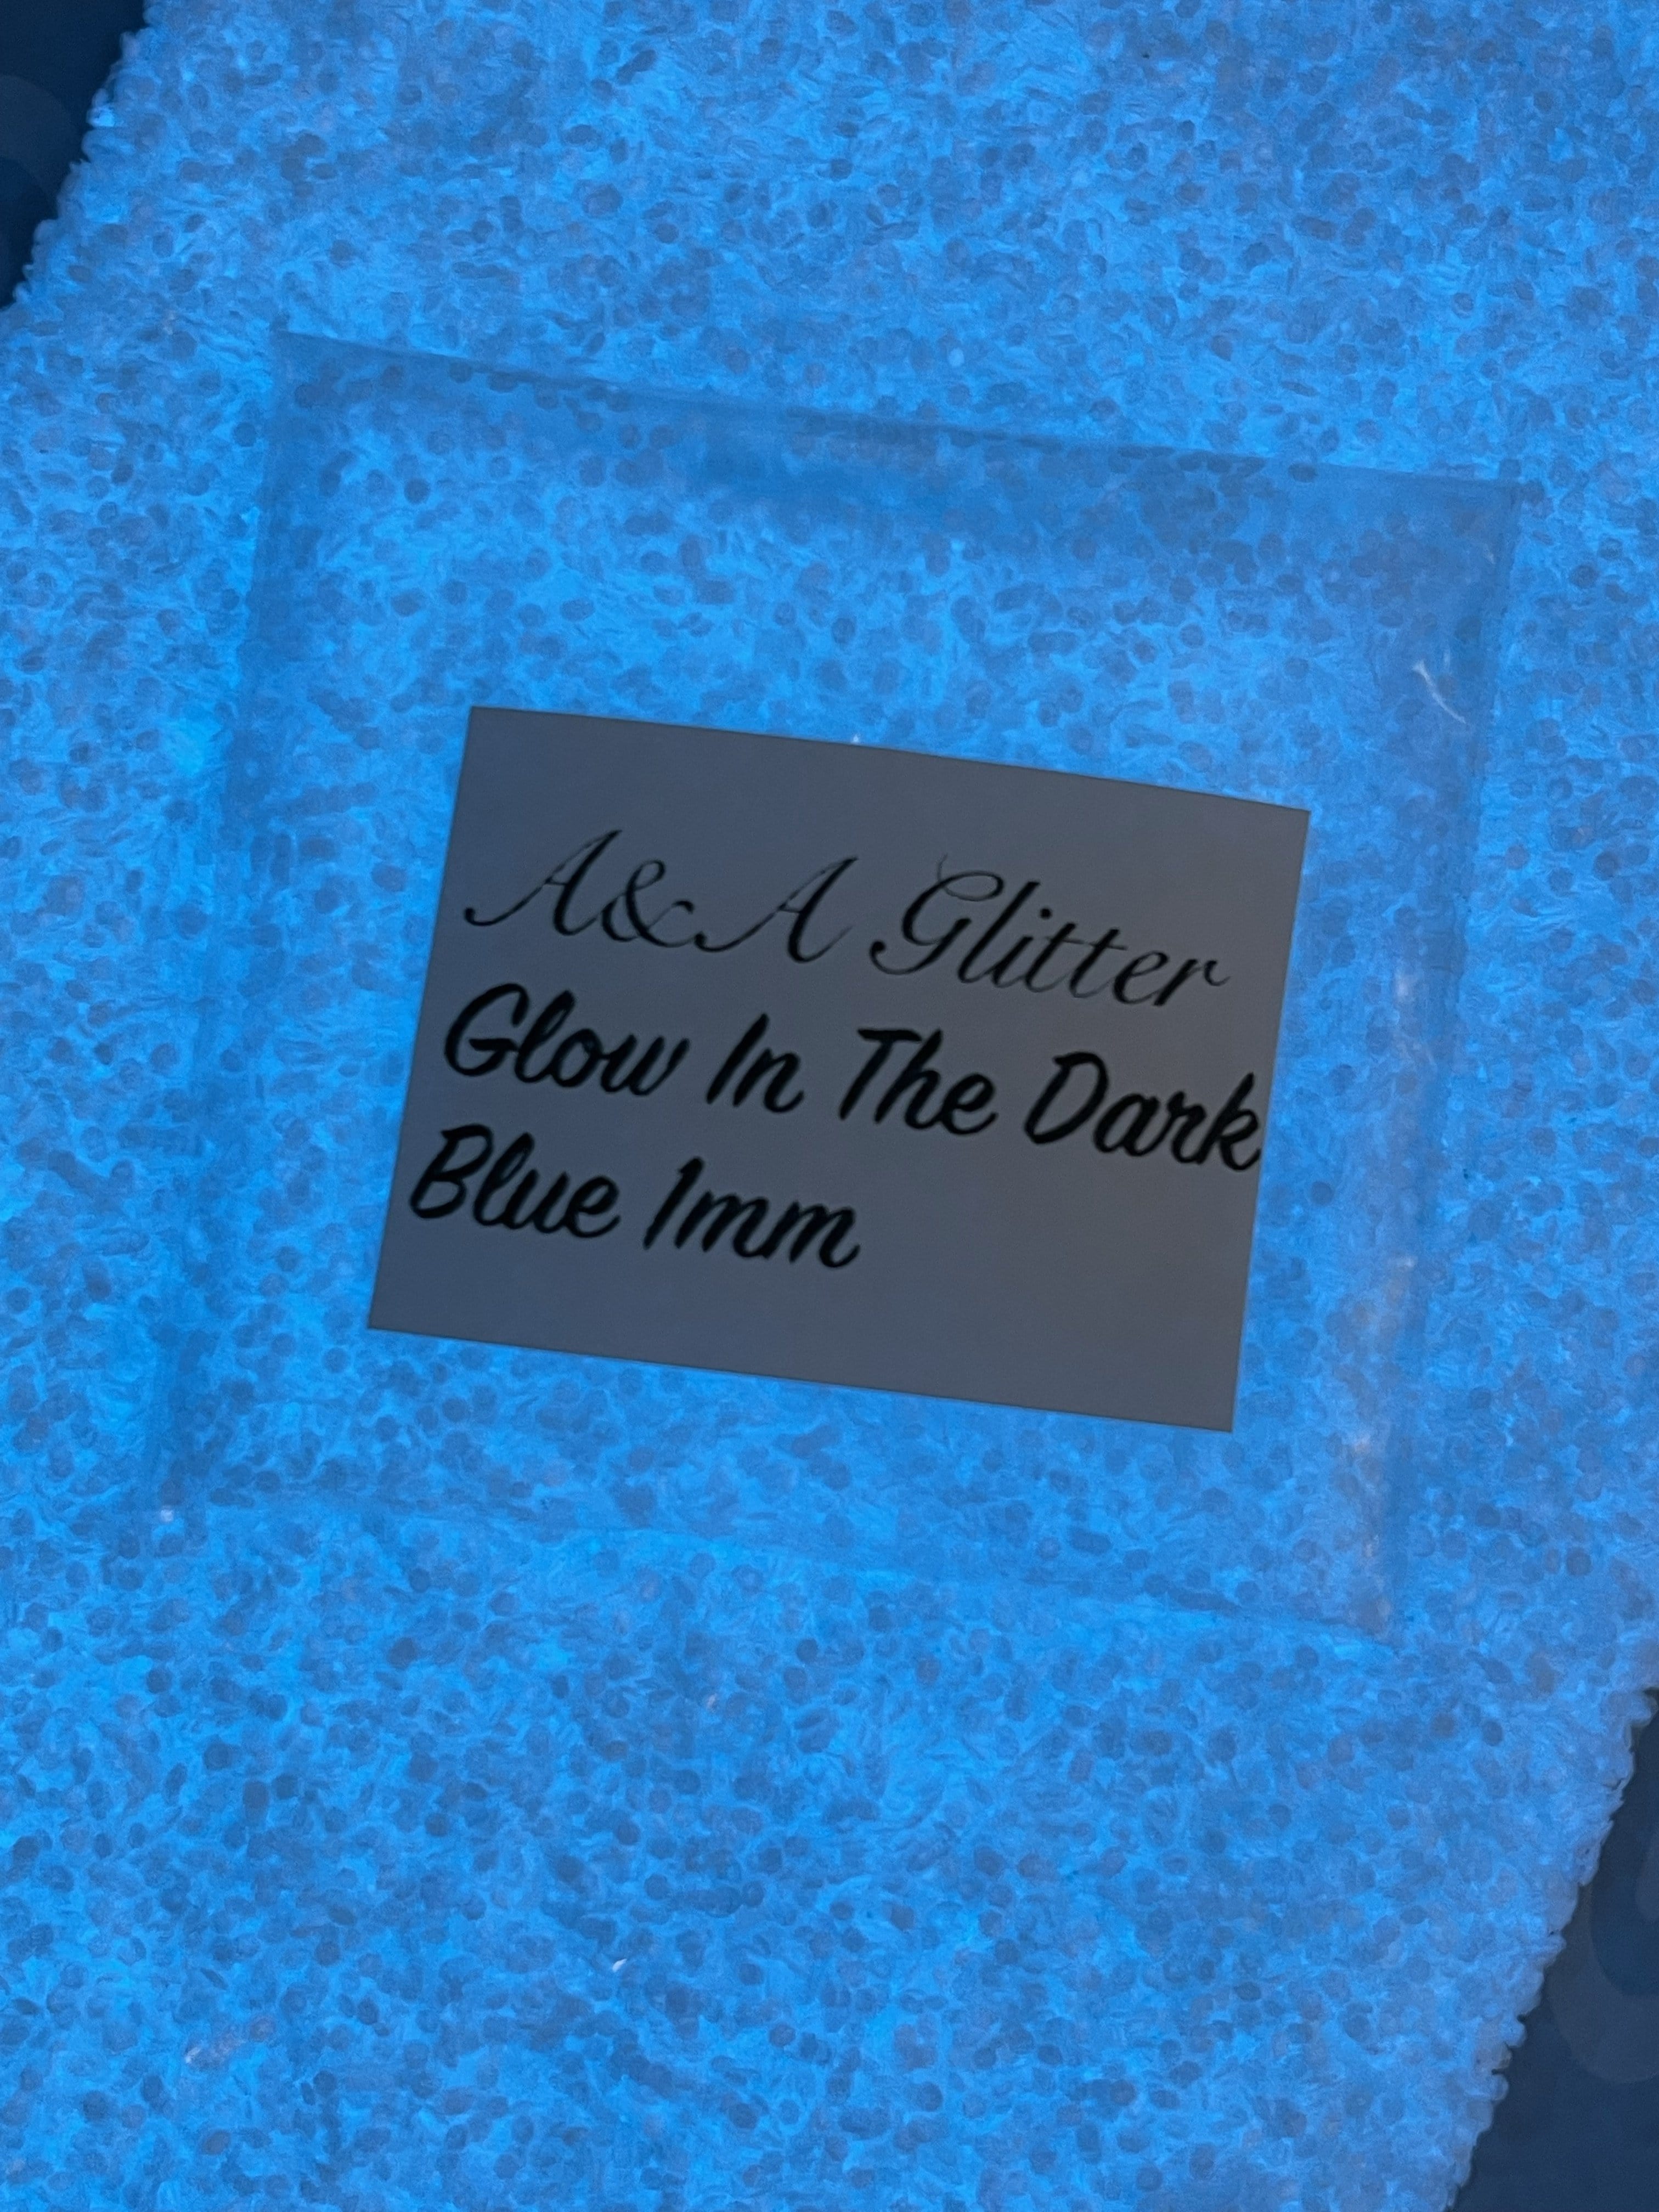 Glow In The Dark - Blue 1mm